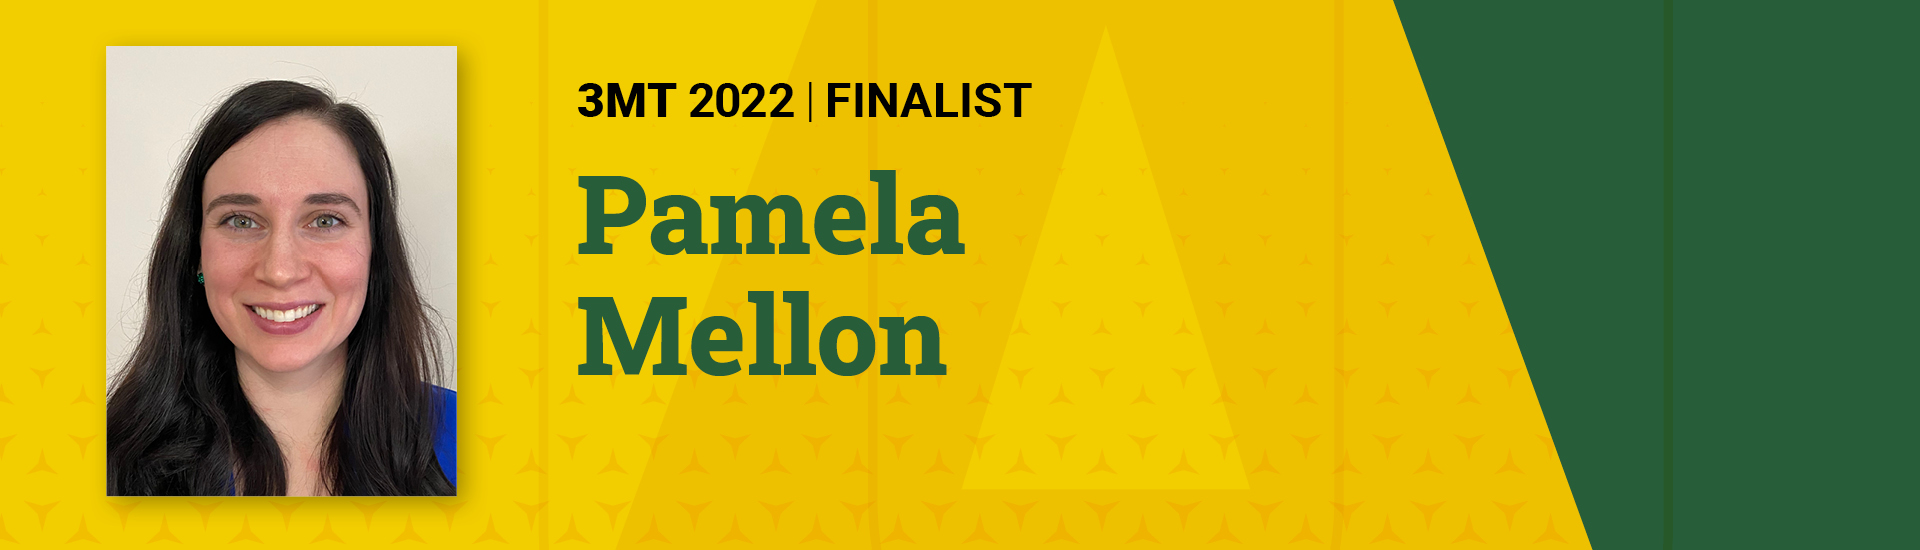 3MT 2022 Finalist Pamela Mellon